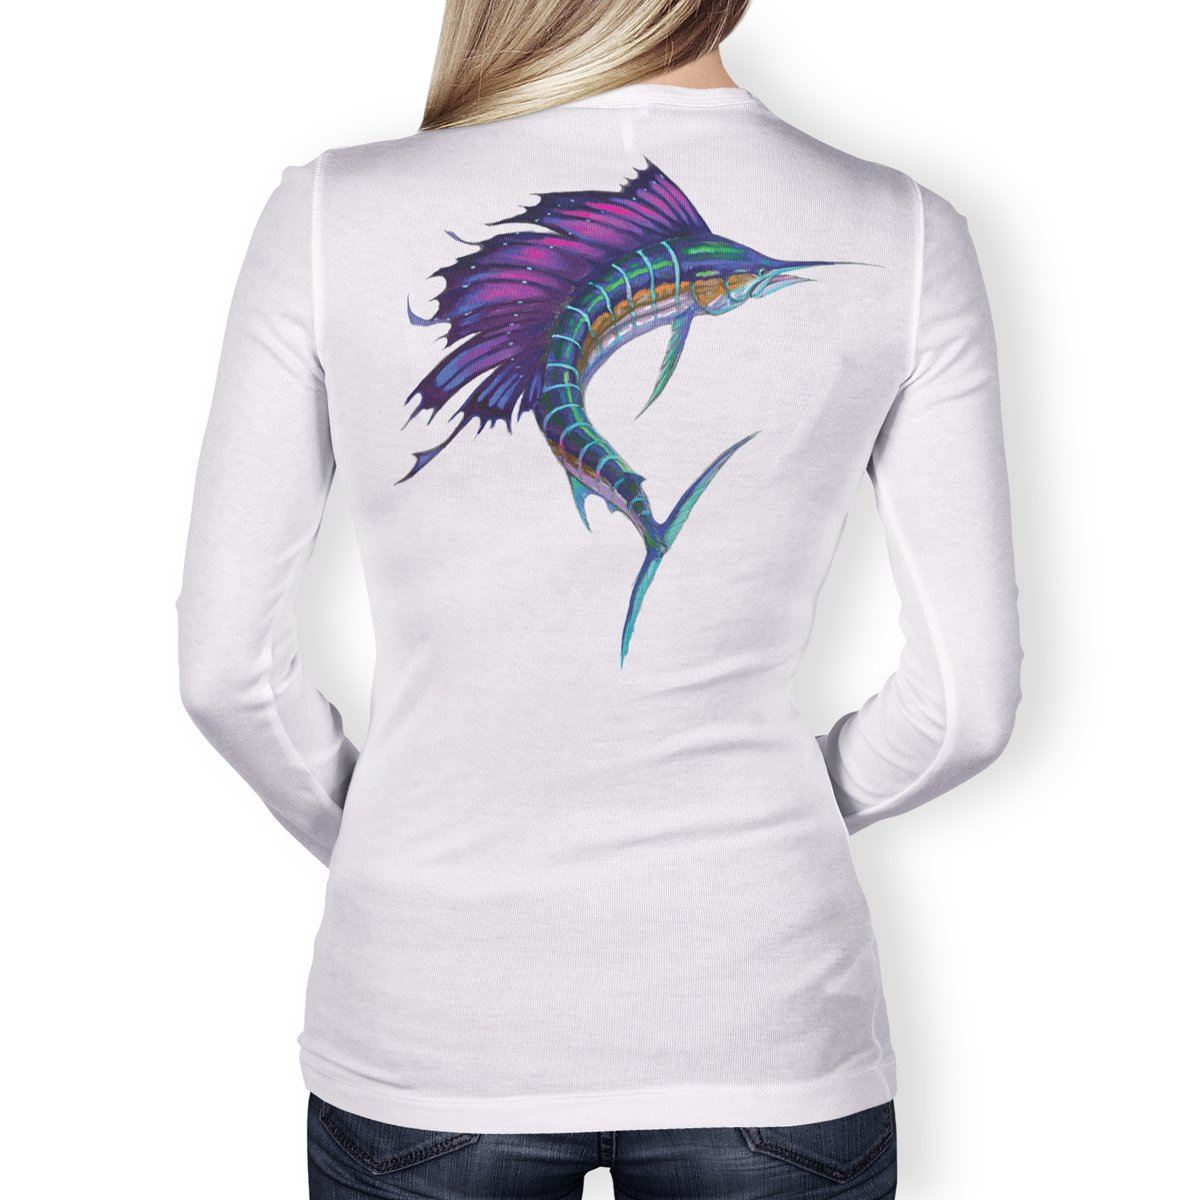 Women's Performance Fishing Shirt Long Sleeve UPF 50+ (Sailfish), XL